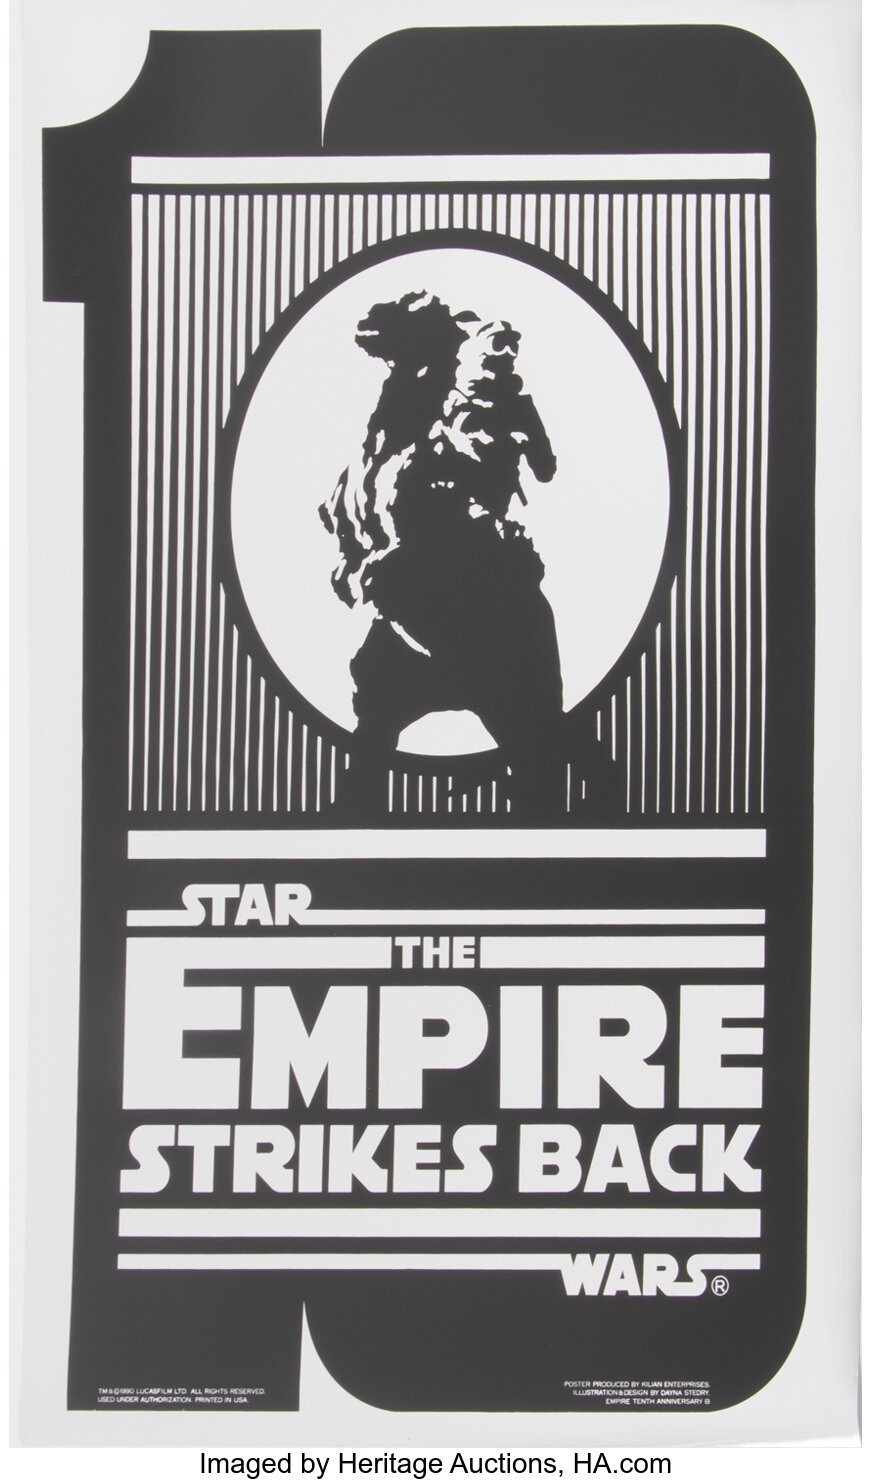 Proberen leraar Vervormen Star Wars franchise (5) Kilian mylar 1-sheet posters for the | Lot #2185 |  Heritage Auctions